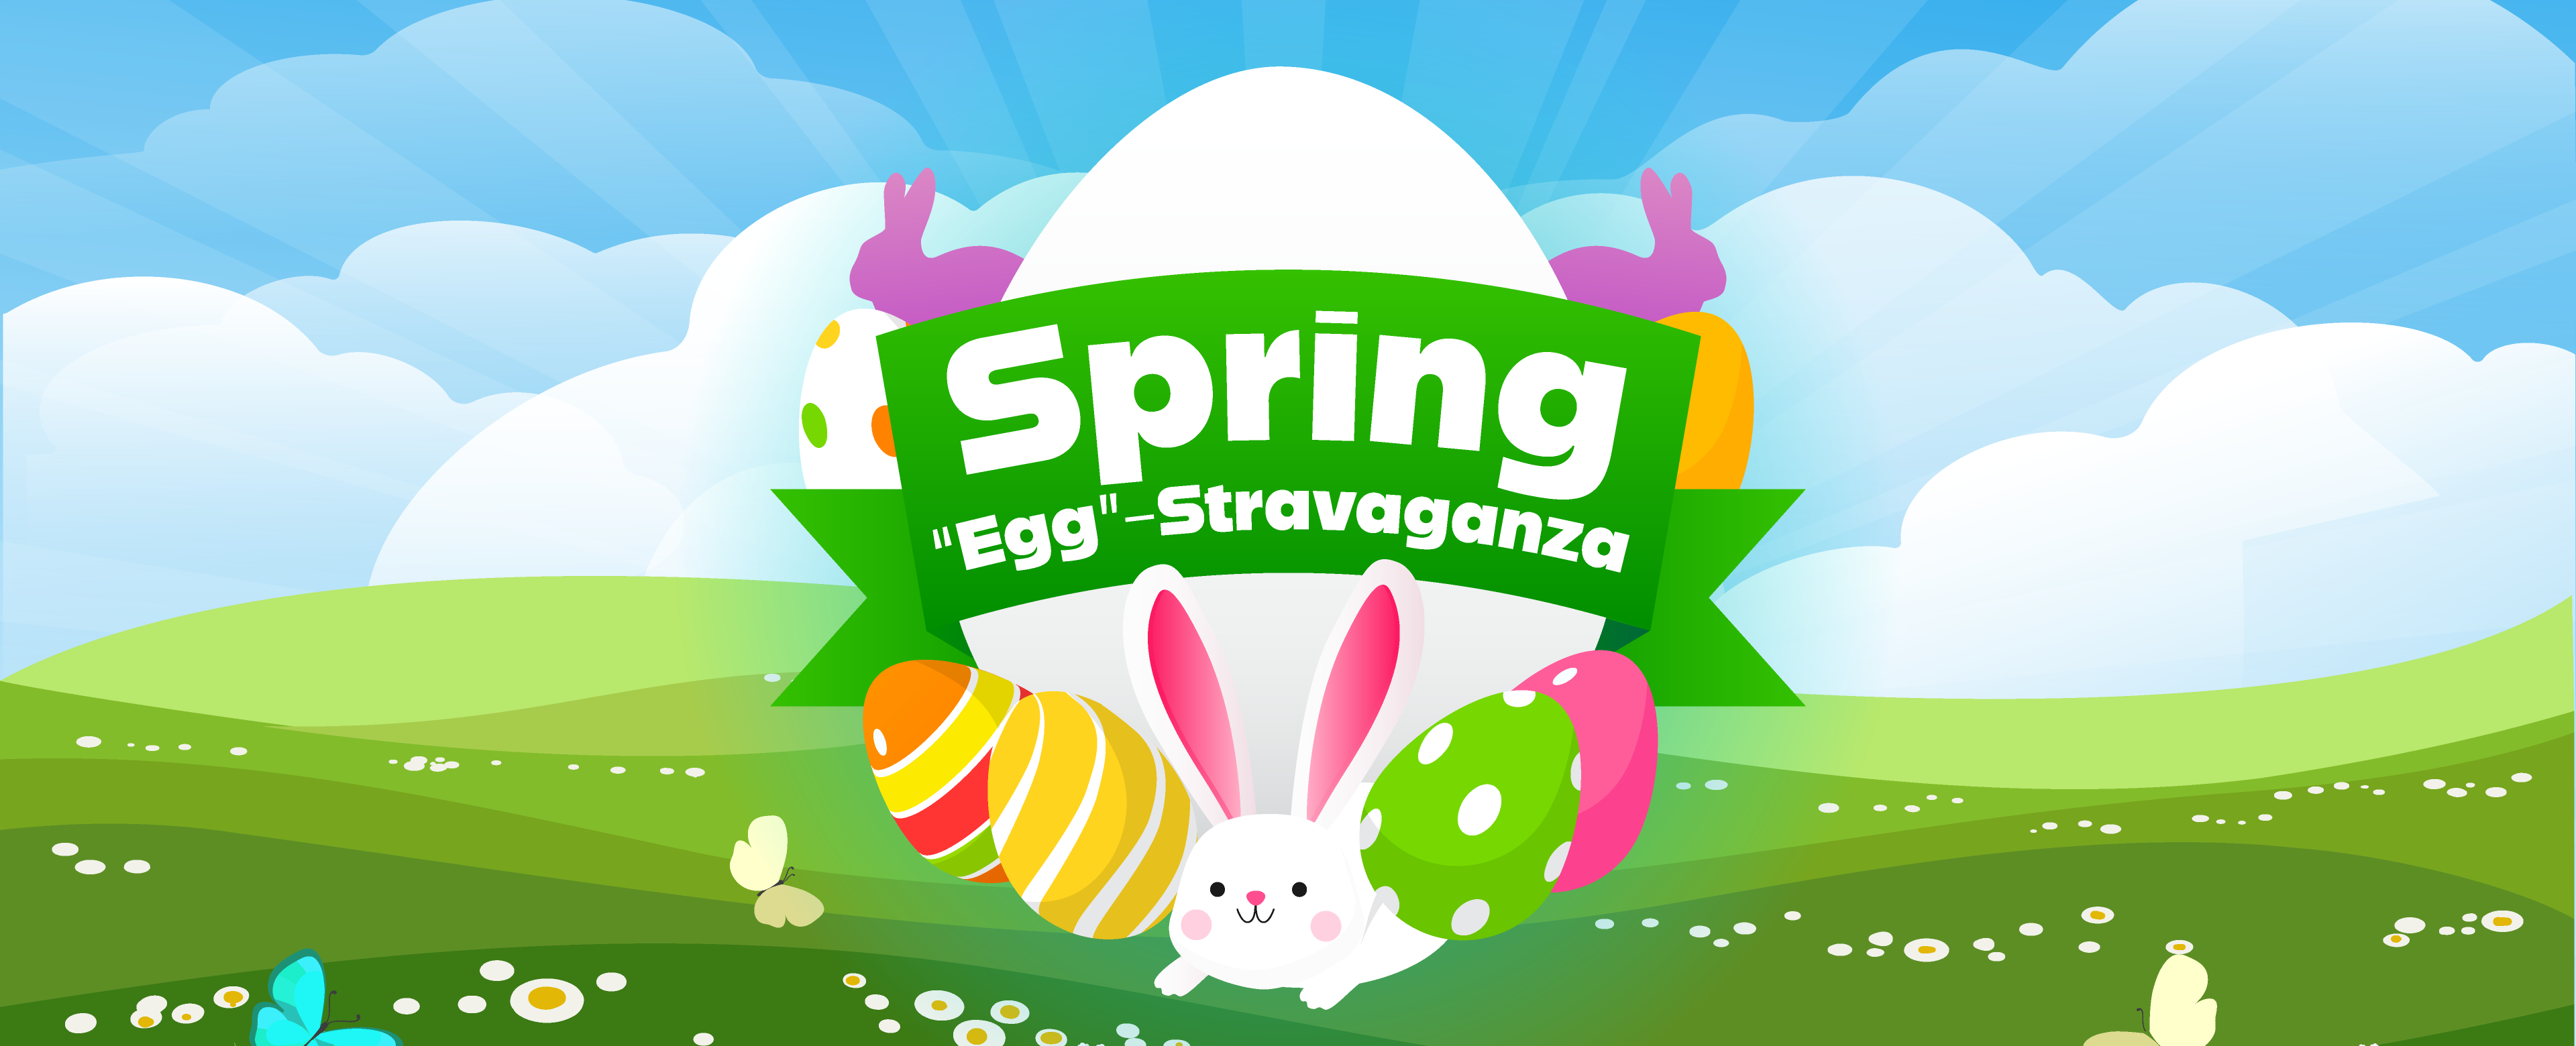 Spring Egg-stravaganza